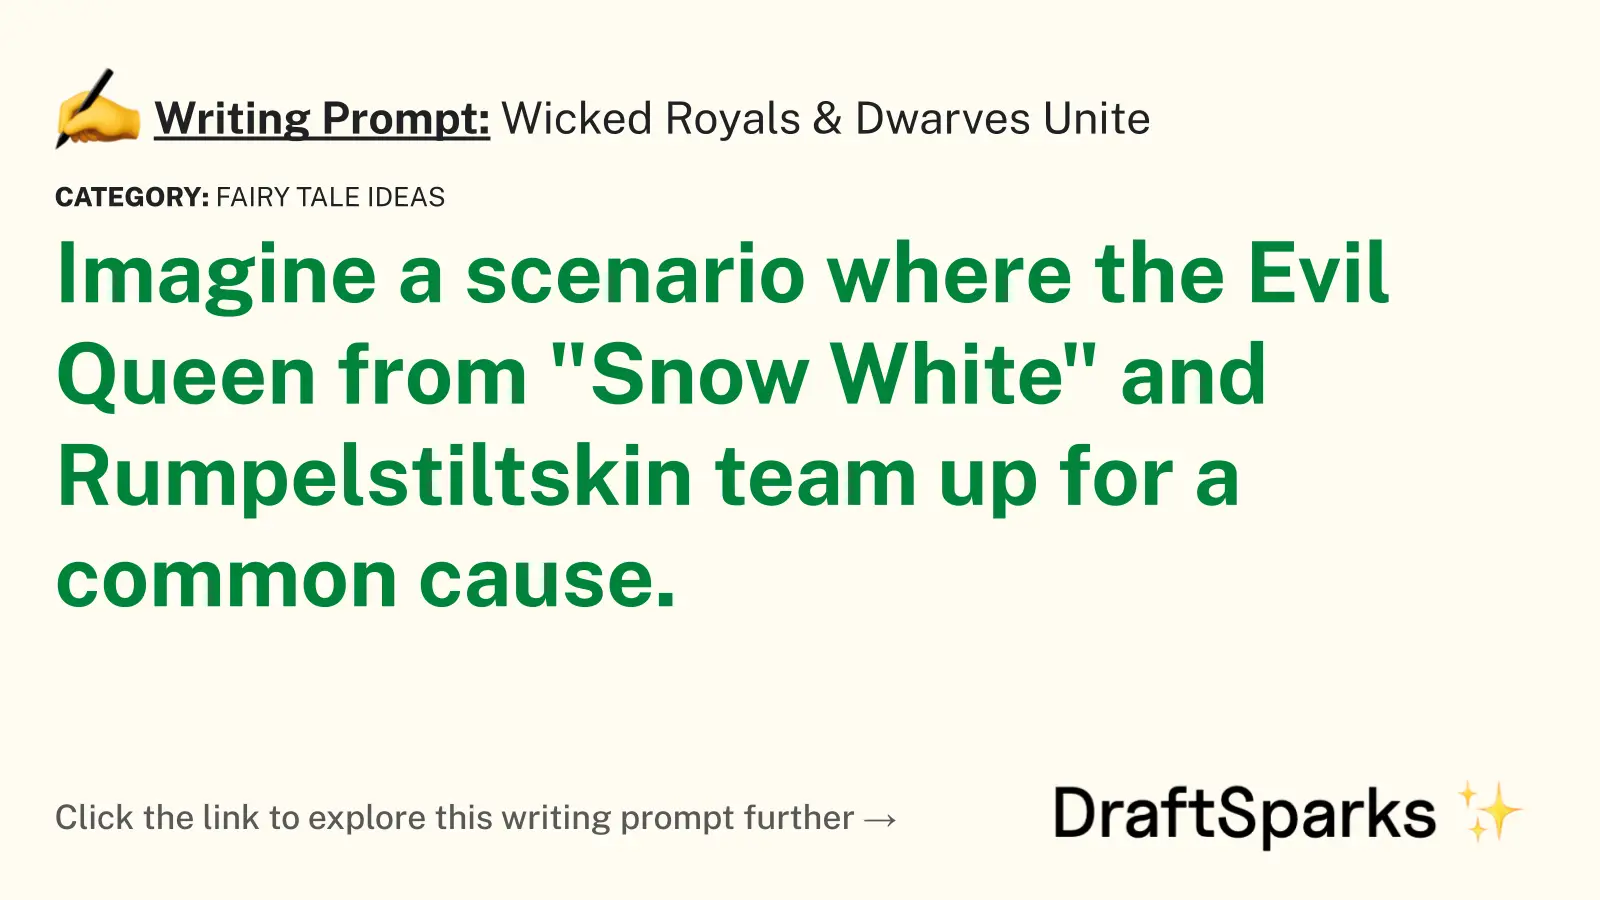 Wicked Royals & Dwarves Unite